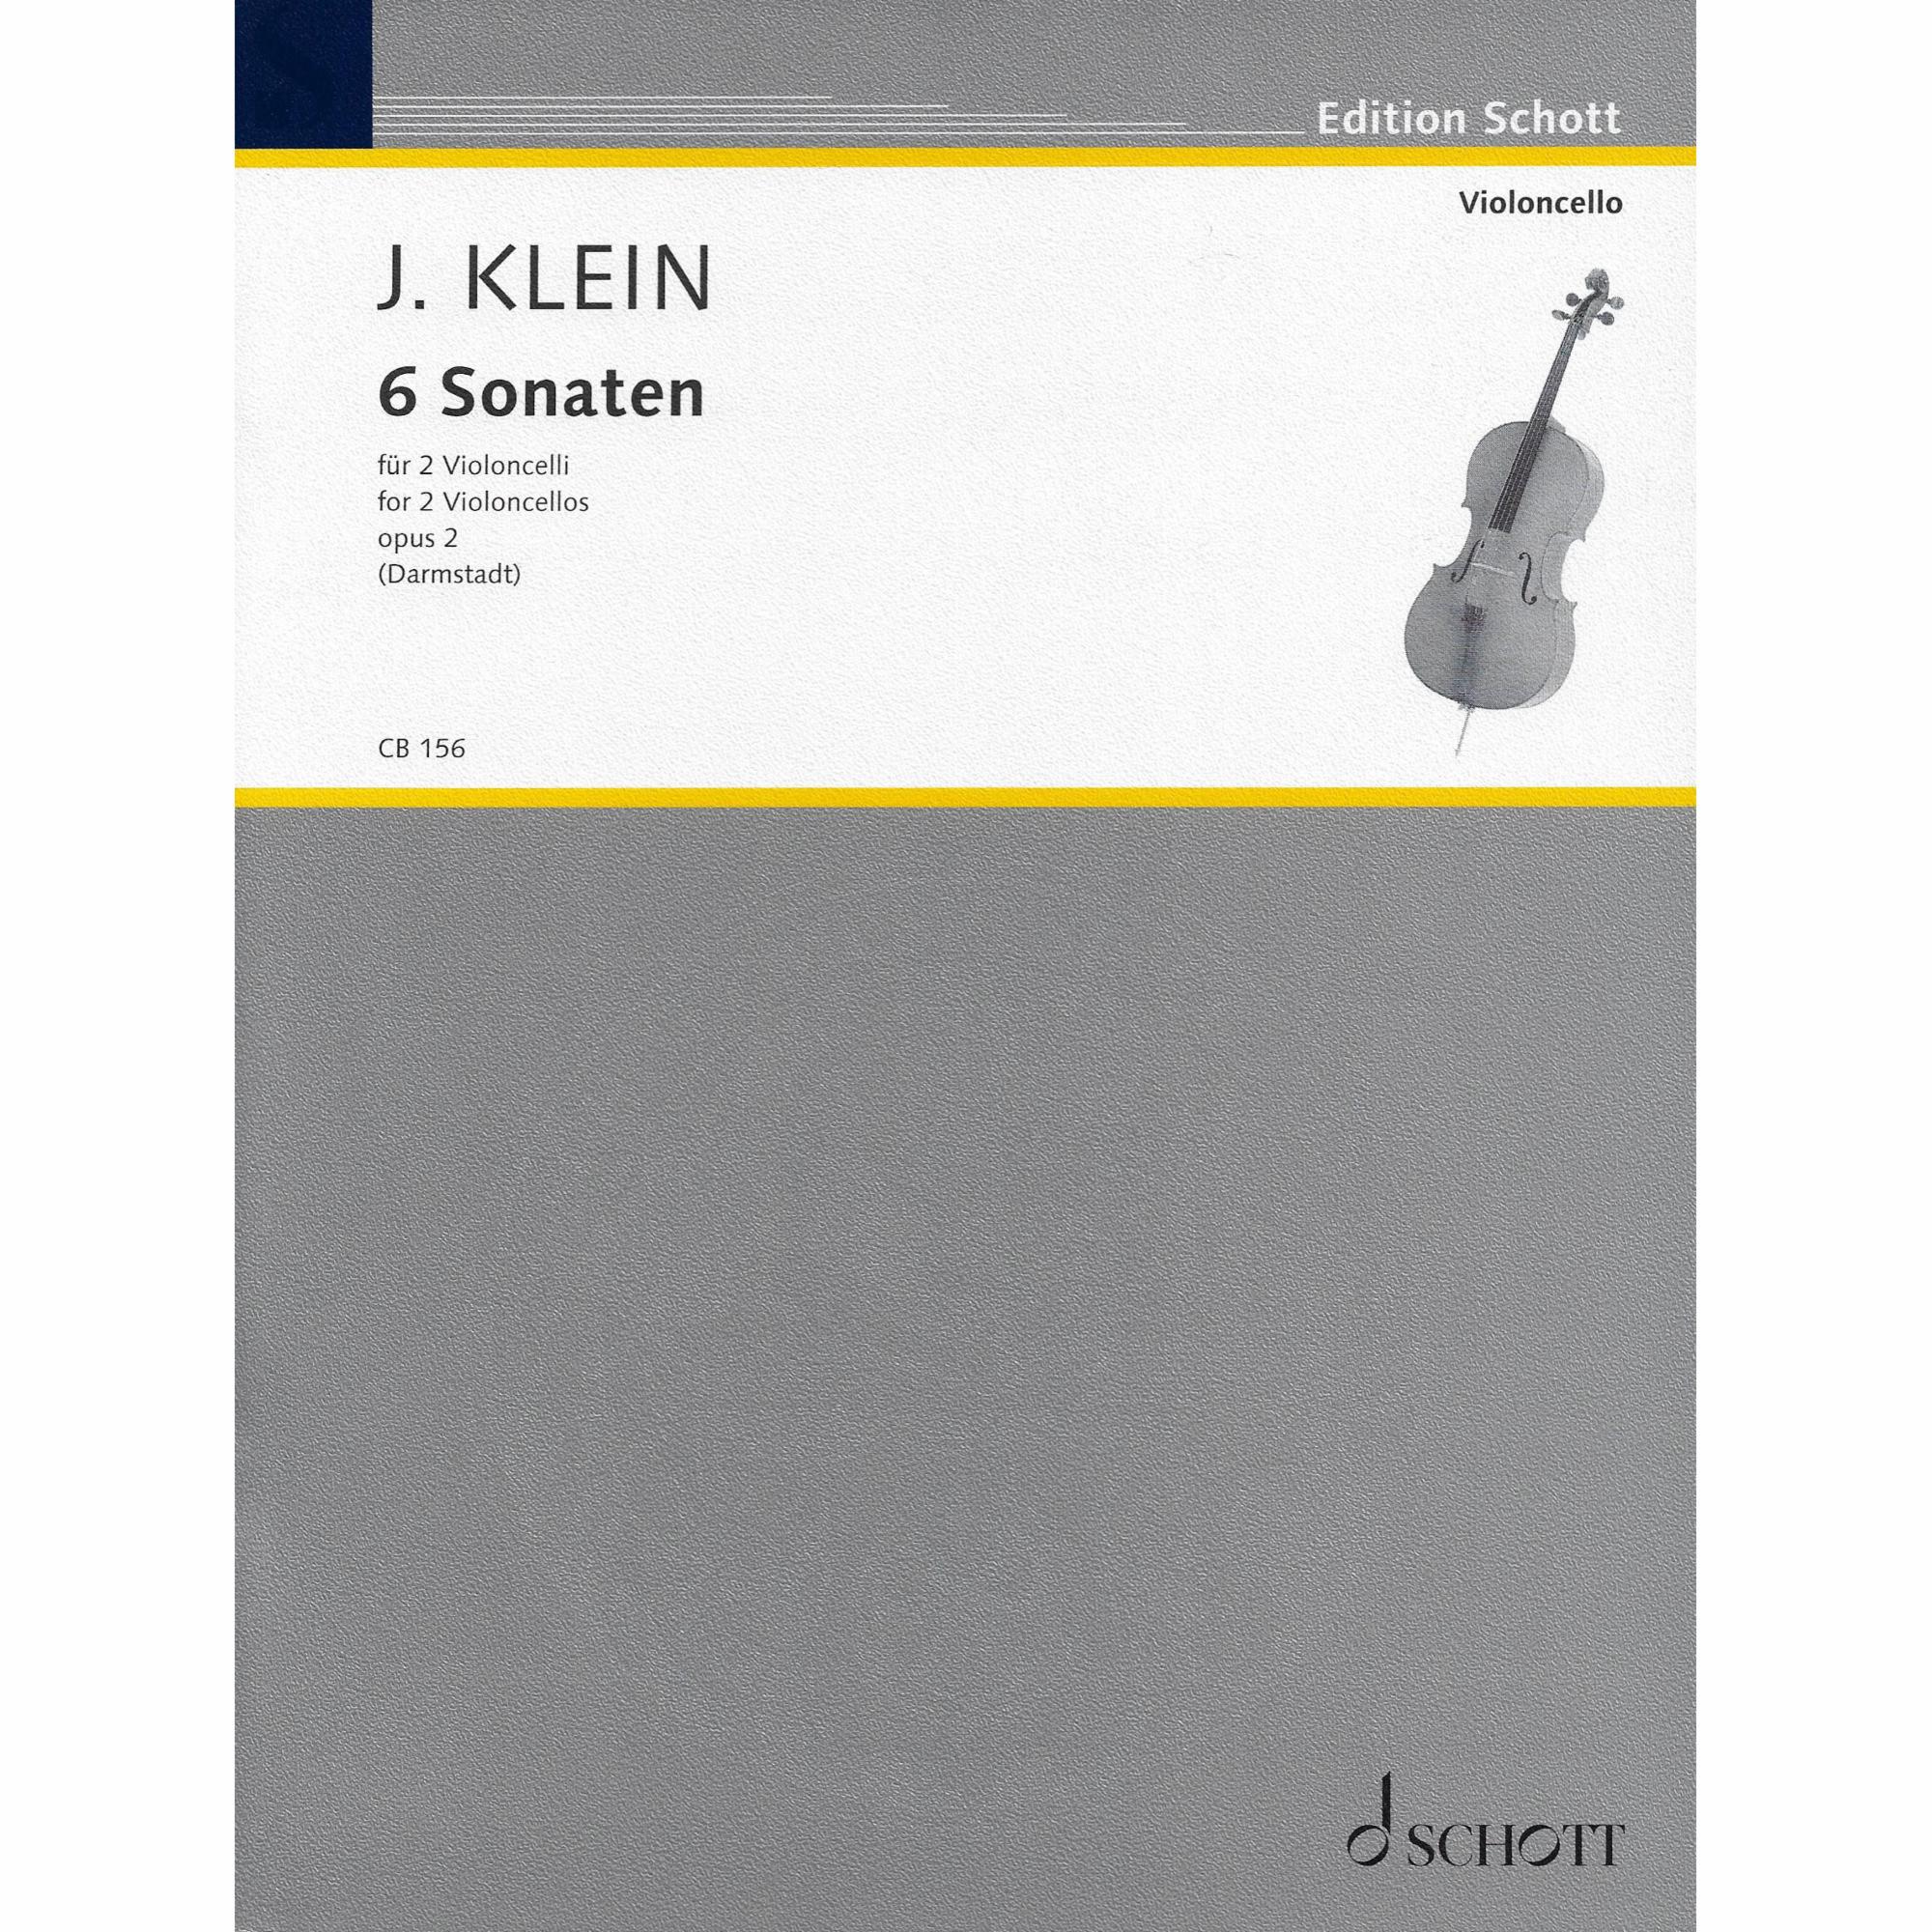 Klein -- 6 Sonatas, Op. 2 for Two Cellos